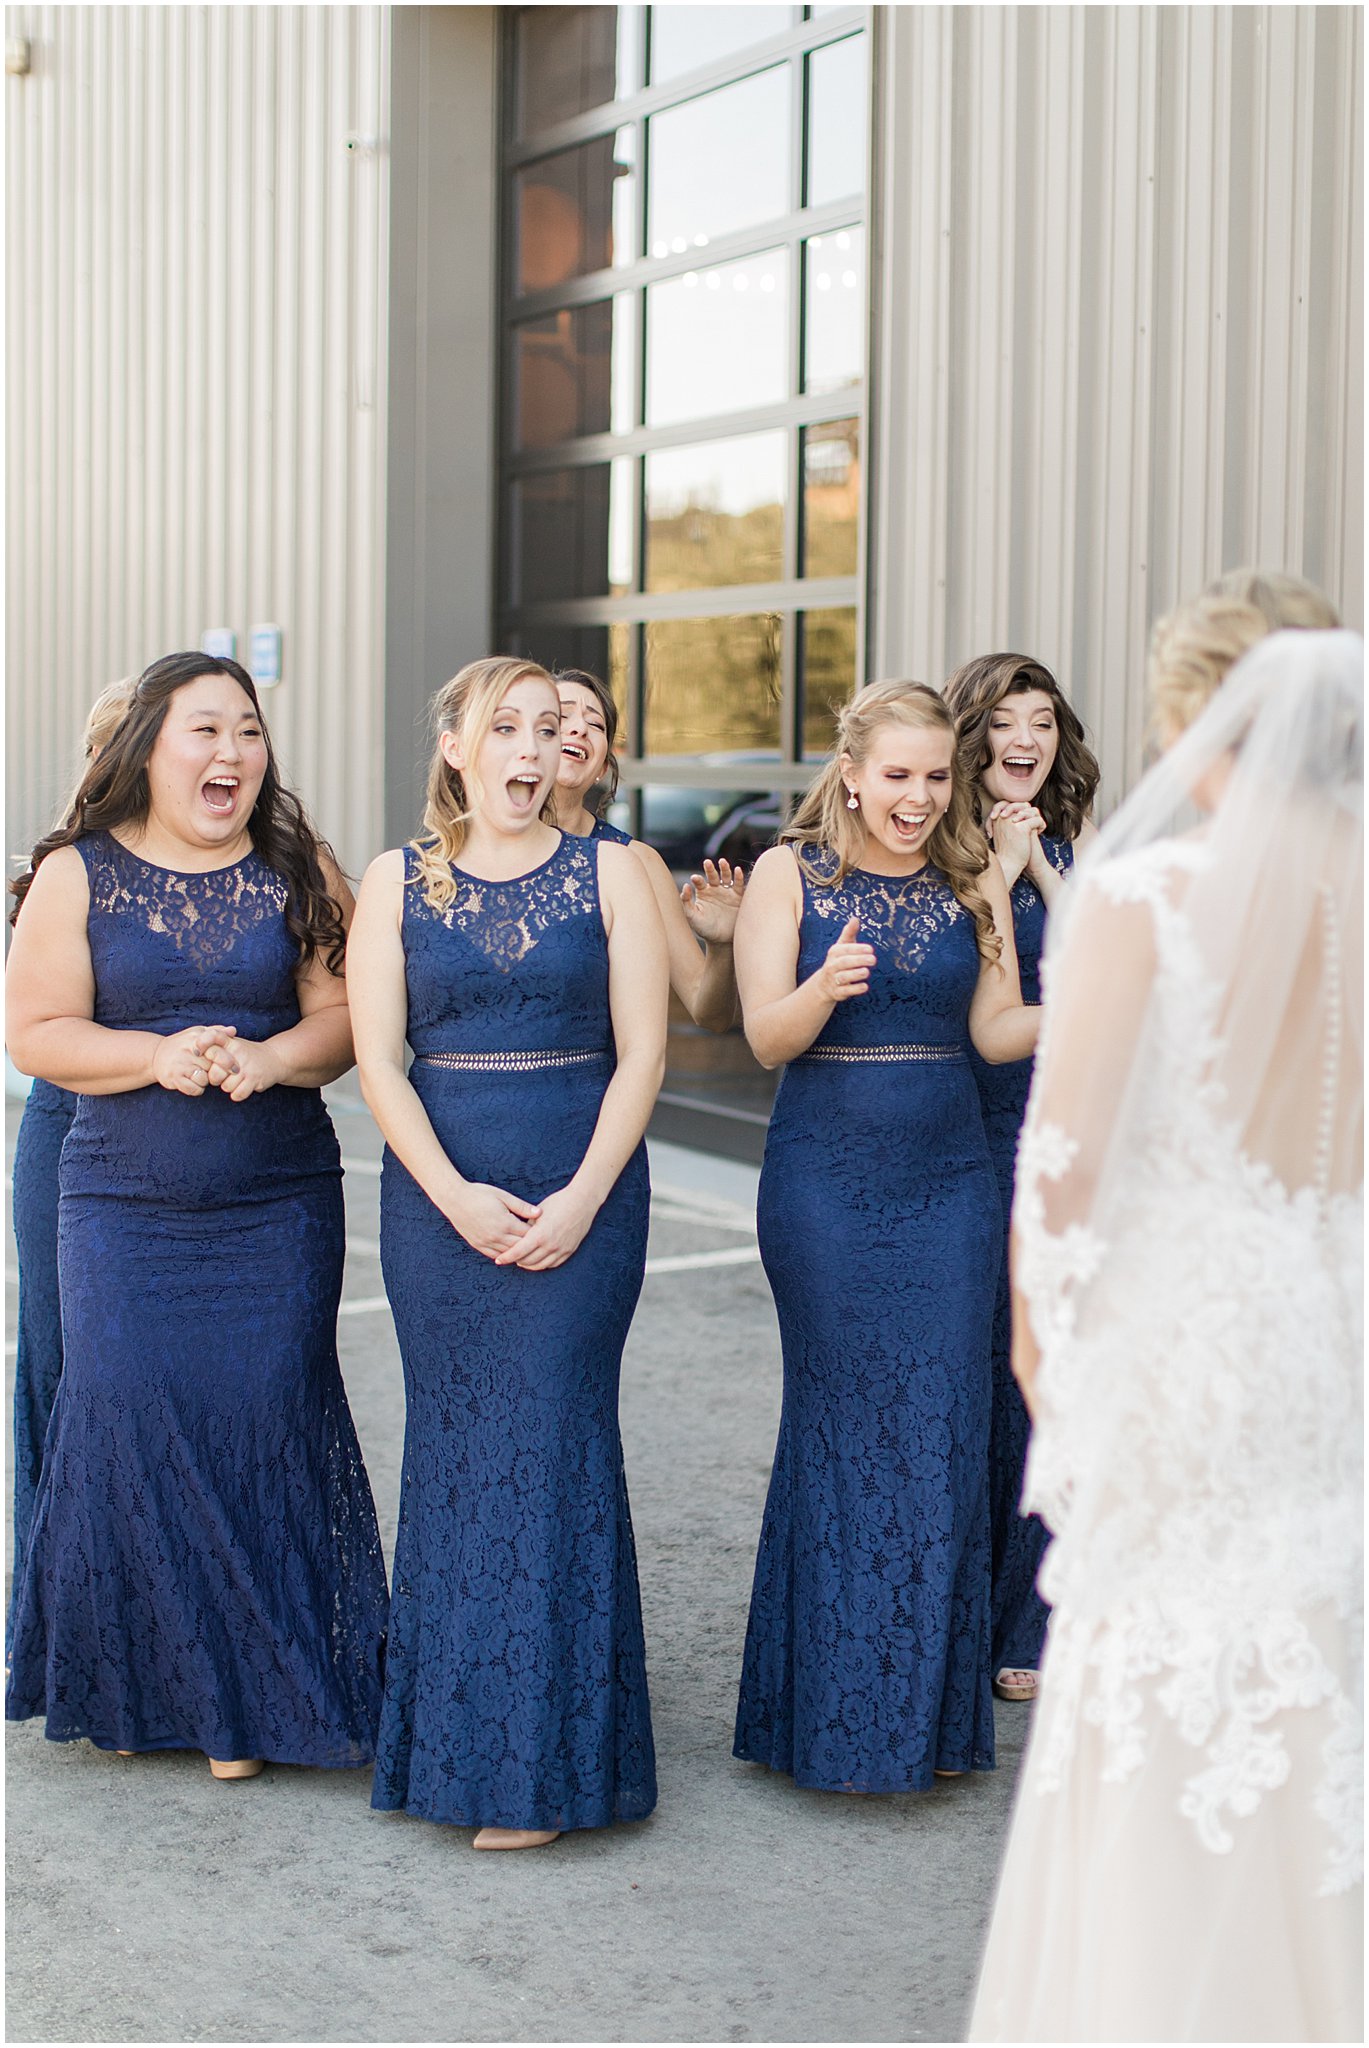 Sycamore Creek Vineyards Wedding - Live Love Leal - Fall Wedding - Bay Area Wedding Photographer - Angela Sue Photography_0015.jpg